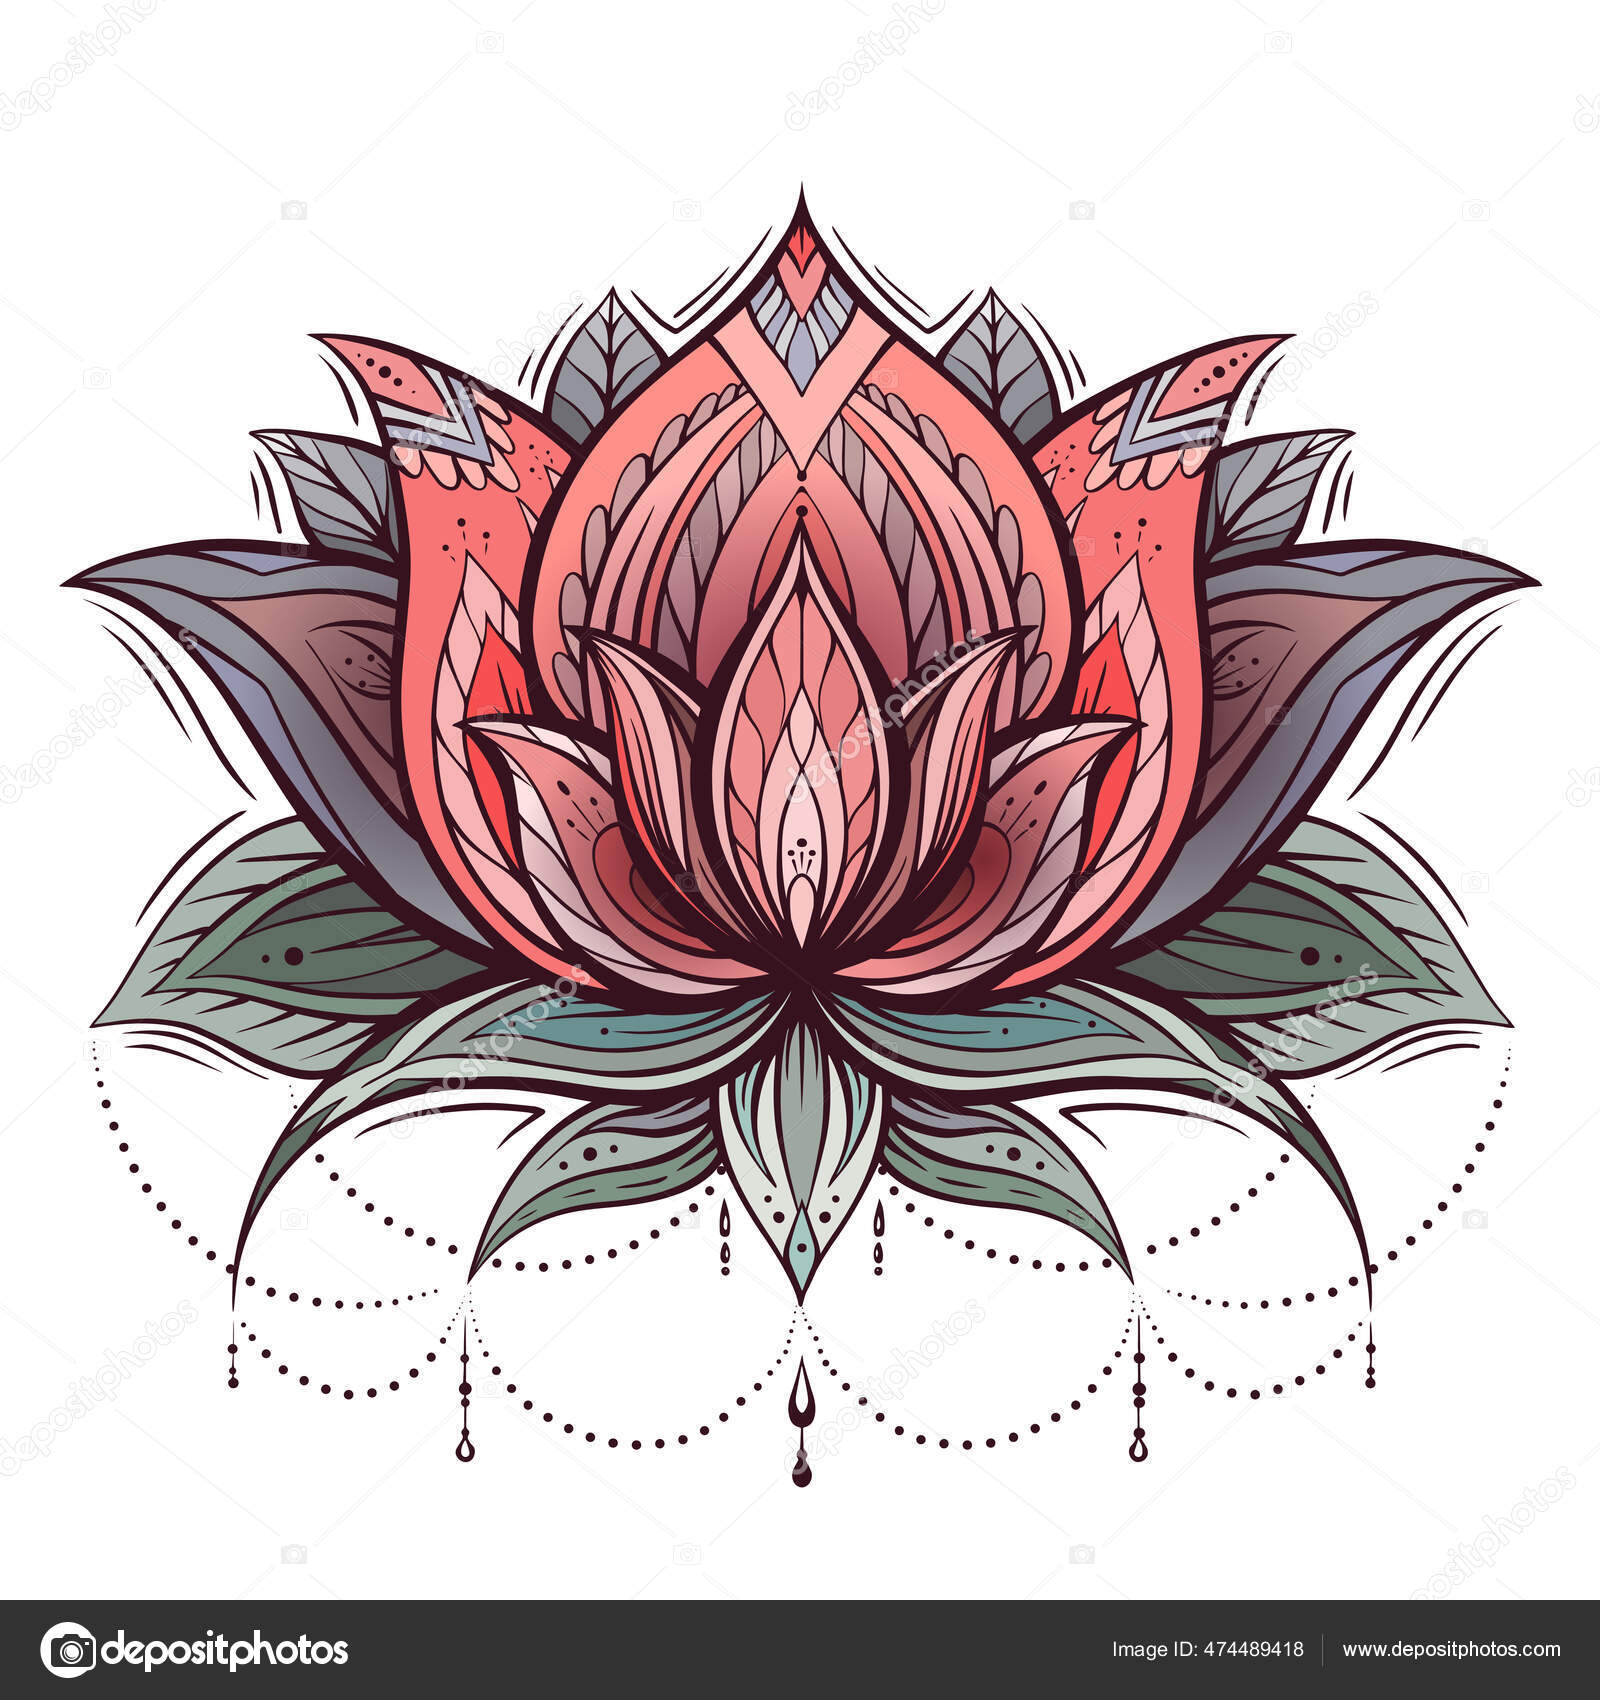 Details more than 150 drawing lotus images